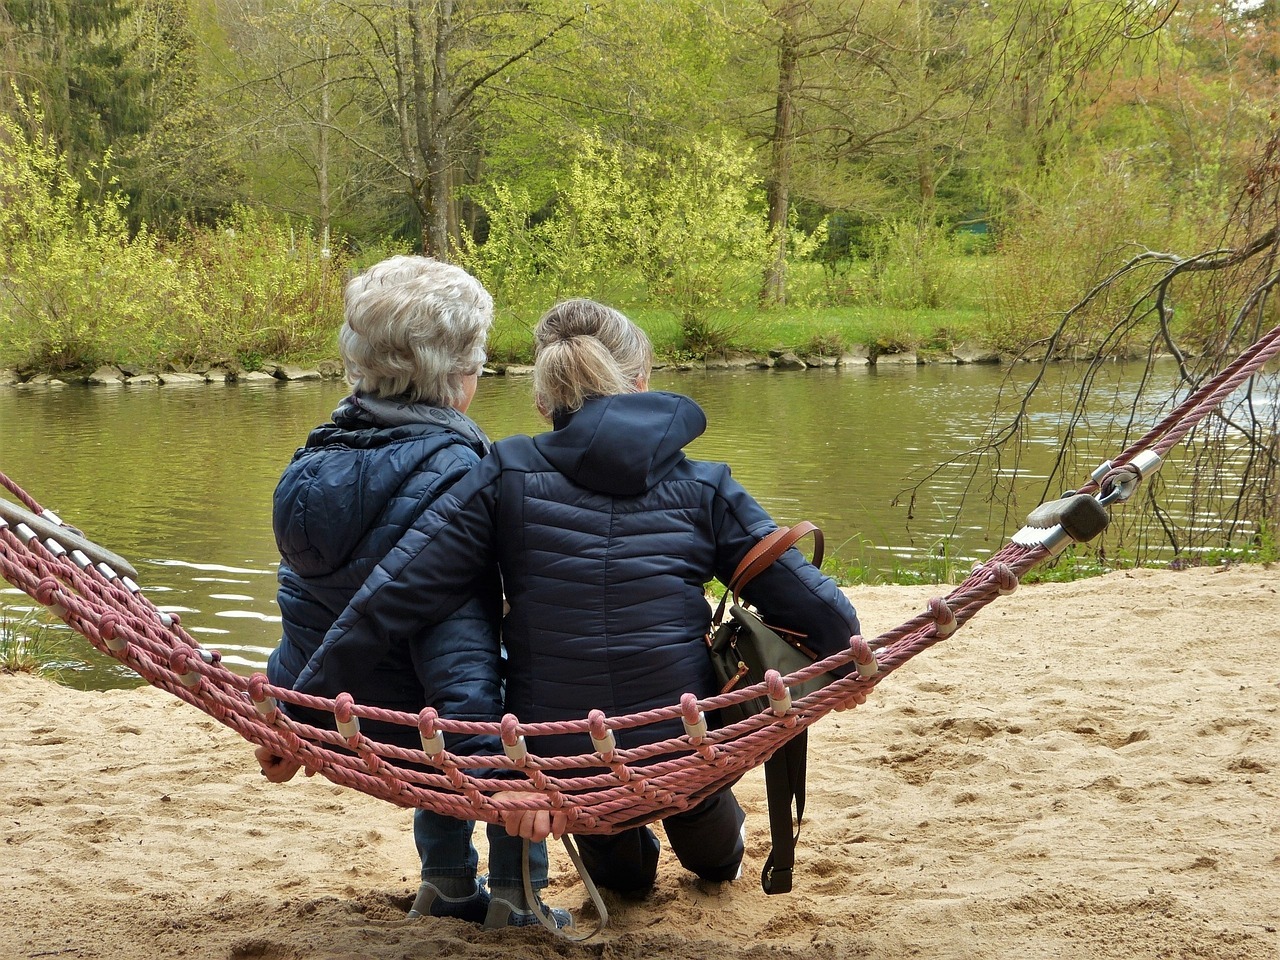 https://pixabay.com/photos/women-hammock-pond-old-pensioners-2300105/